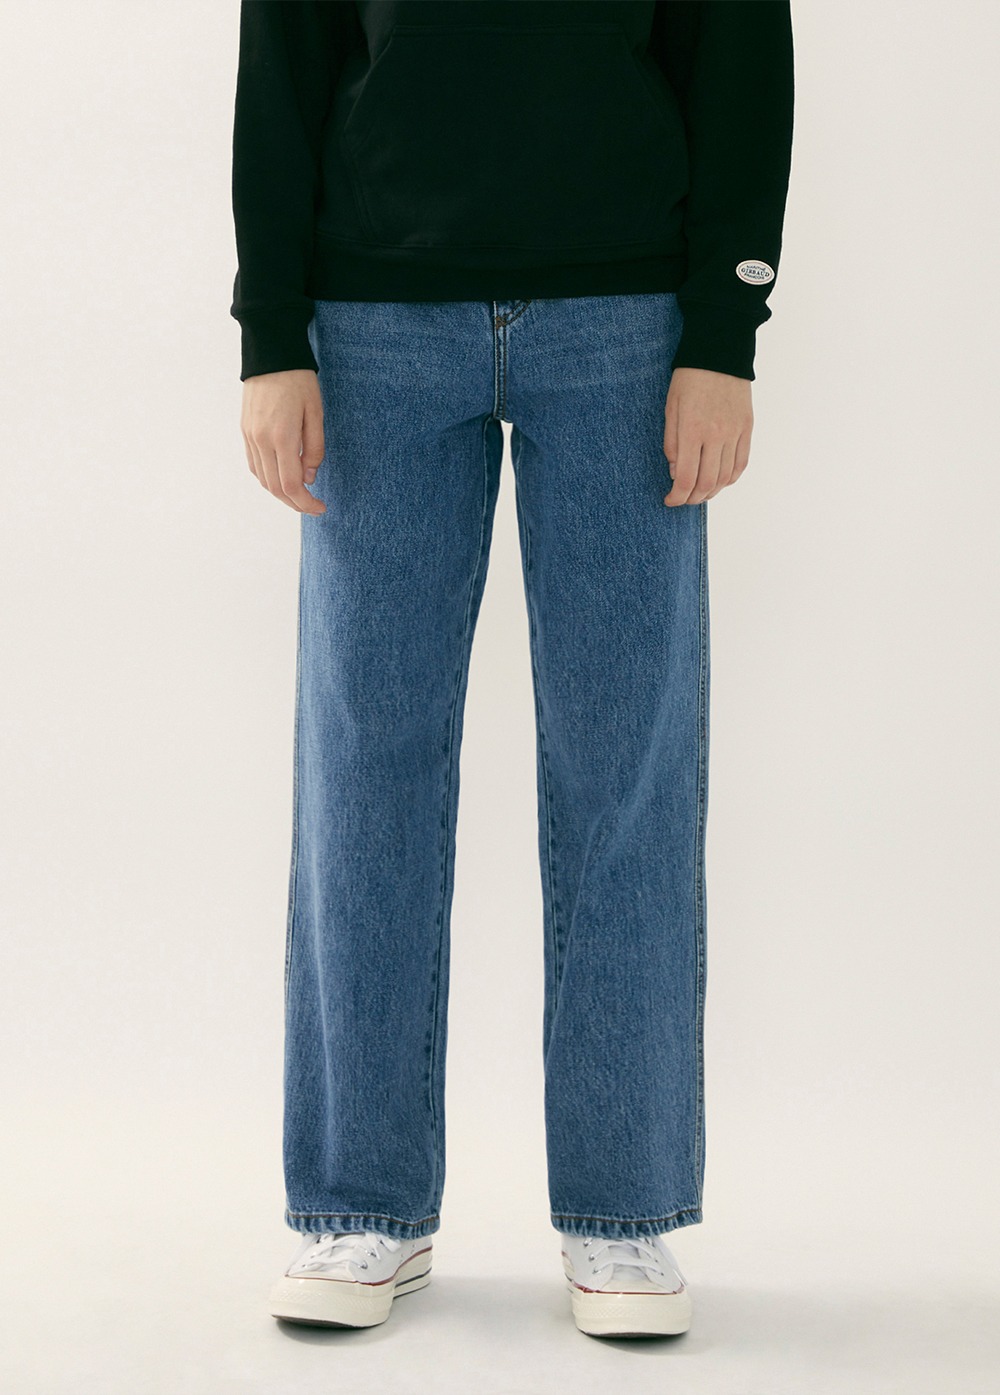 Marith\u00e9 Francois Gribaud Francois Gribaud Straight-Leg Jeans schwarz Casual-Look Mode Jeans Straight-Leg Jeans Marithé 